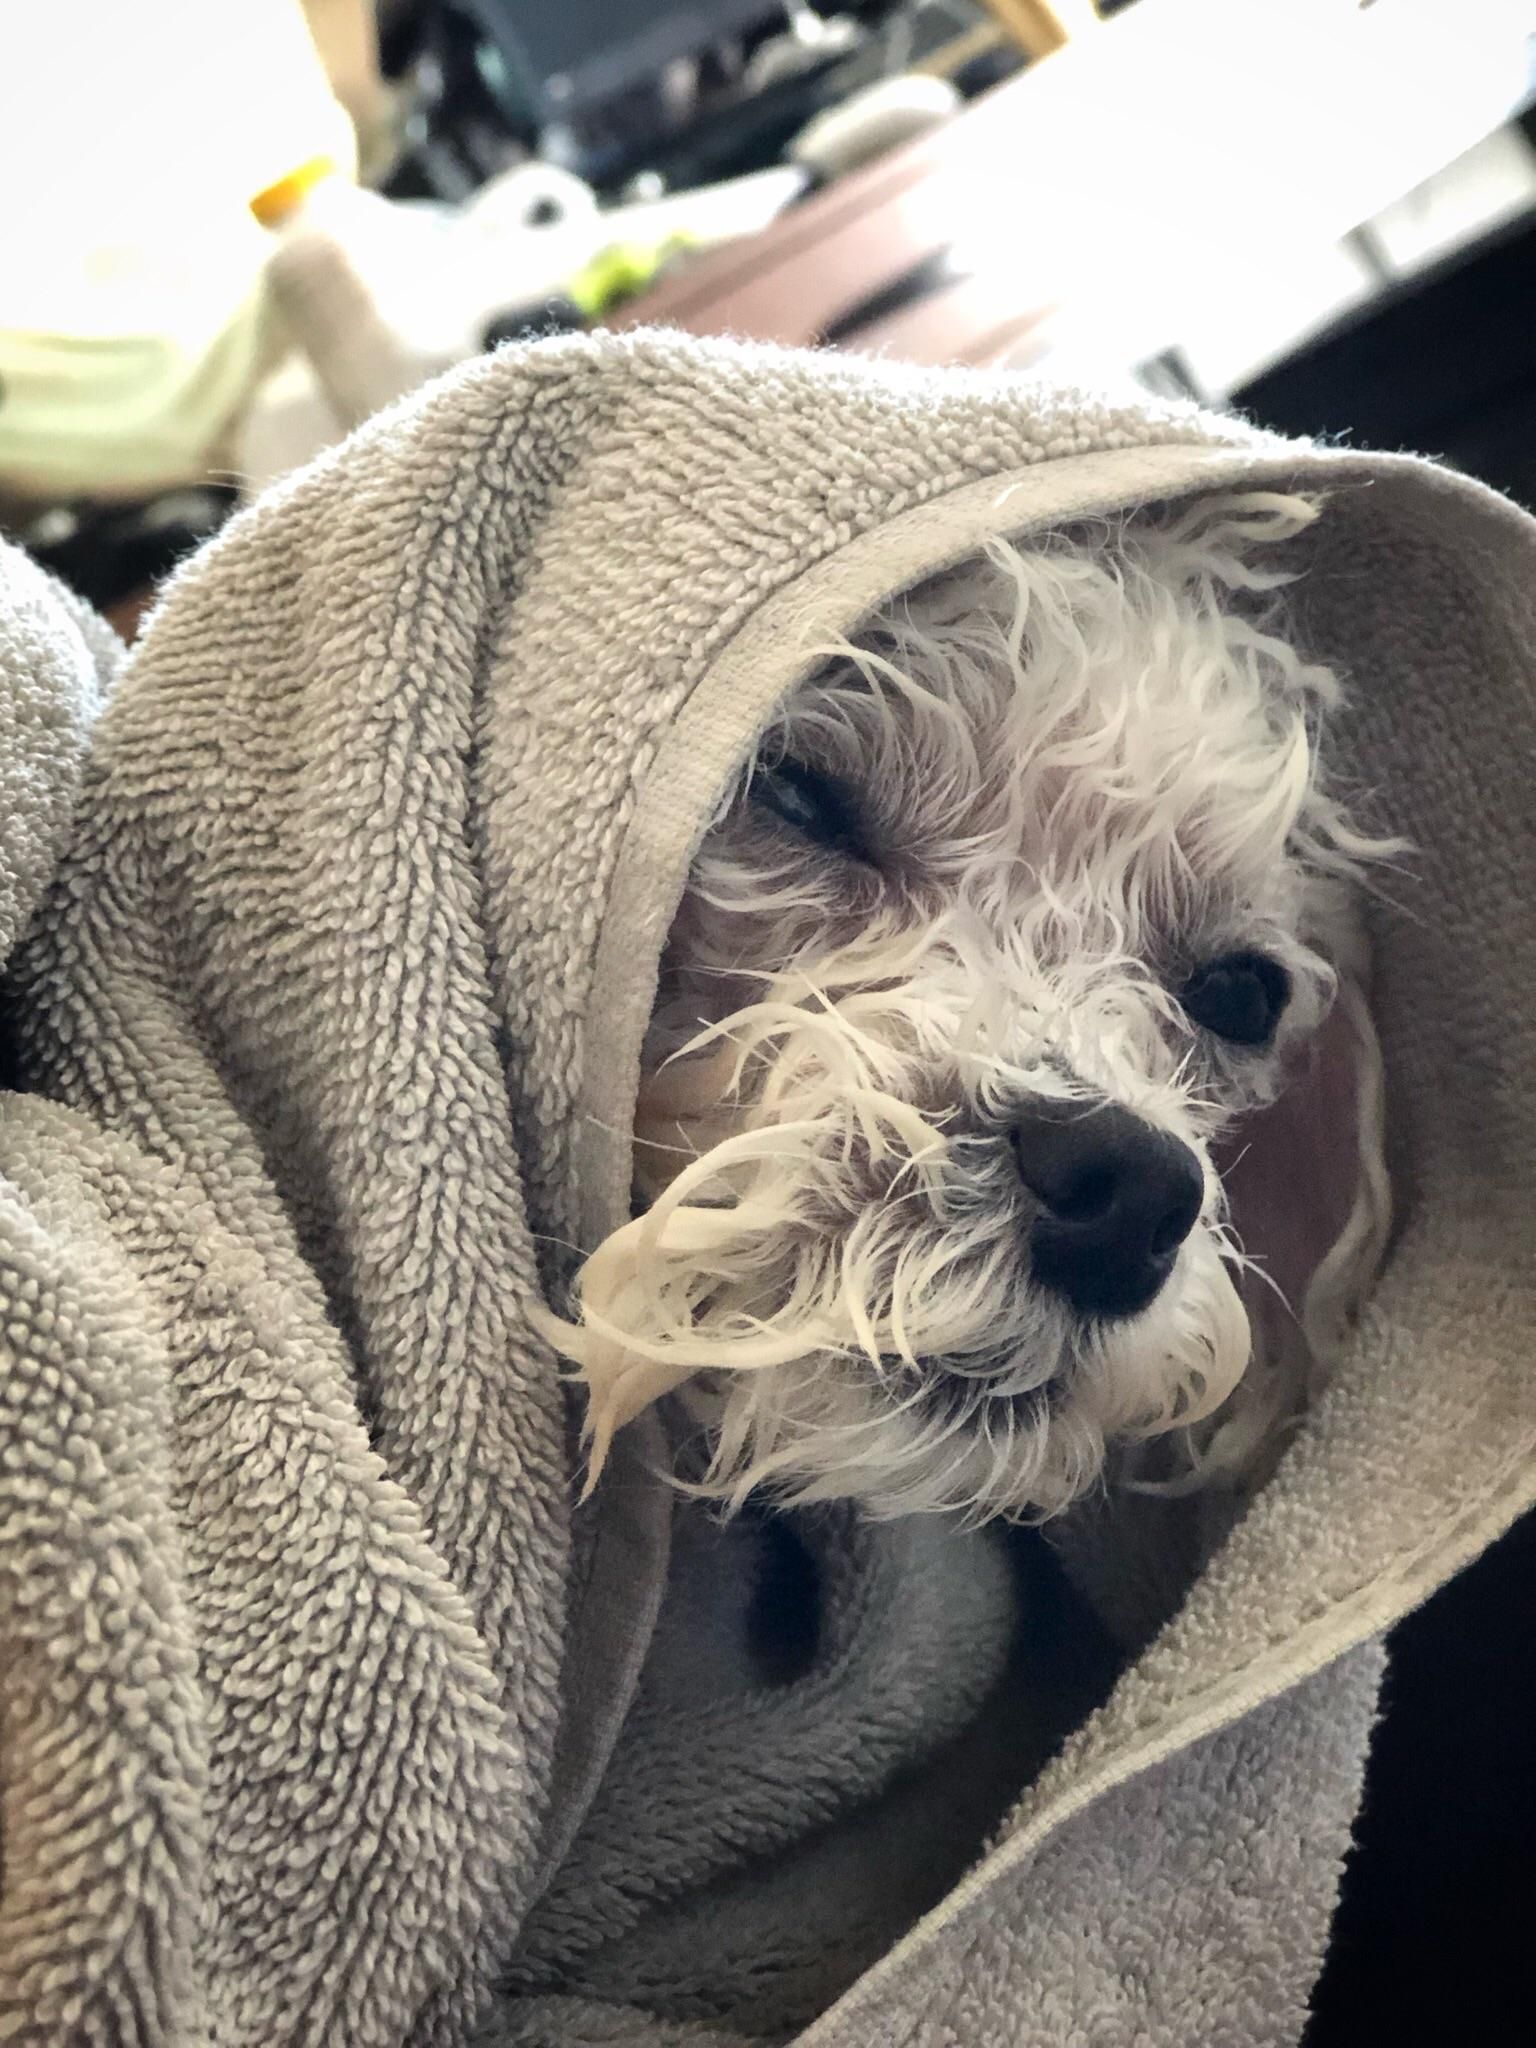 My dog looks like an Old Jedi Master